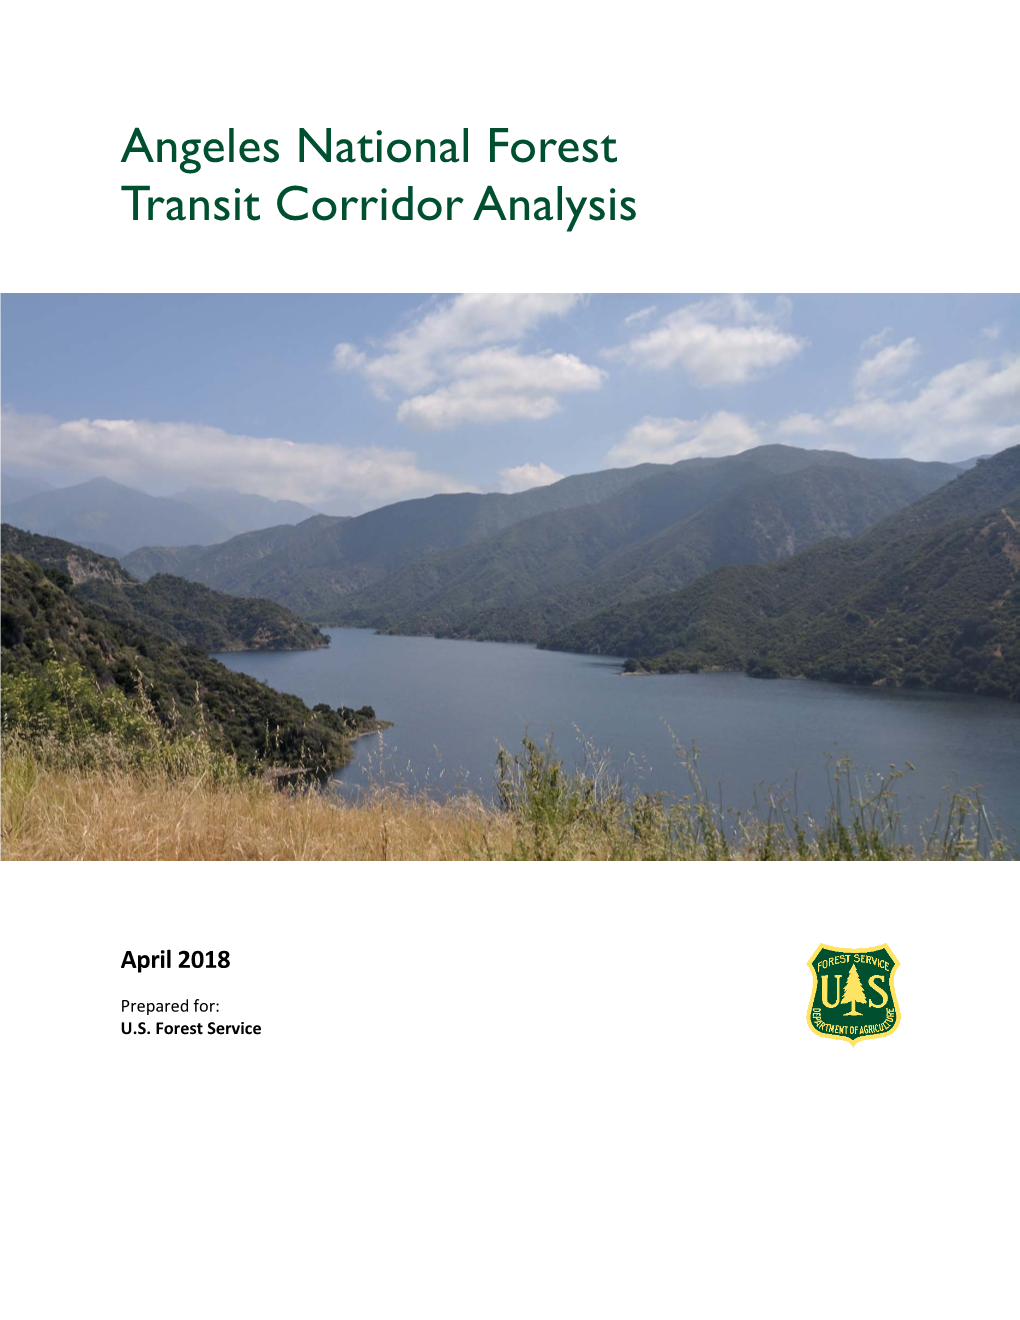 Angeles Nationa Forest: Transit Corridor Analysis